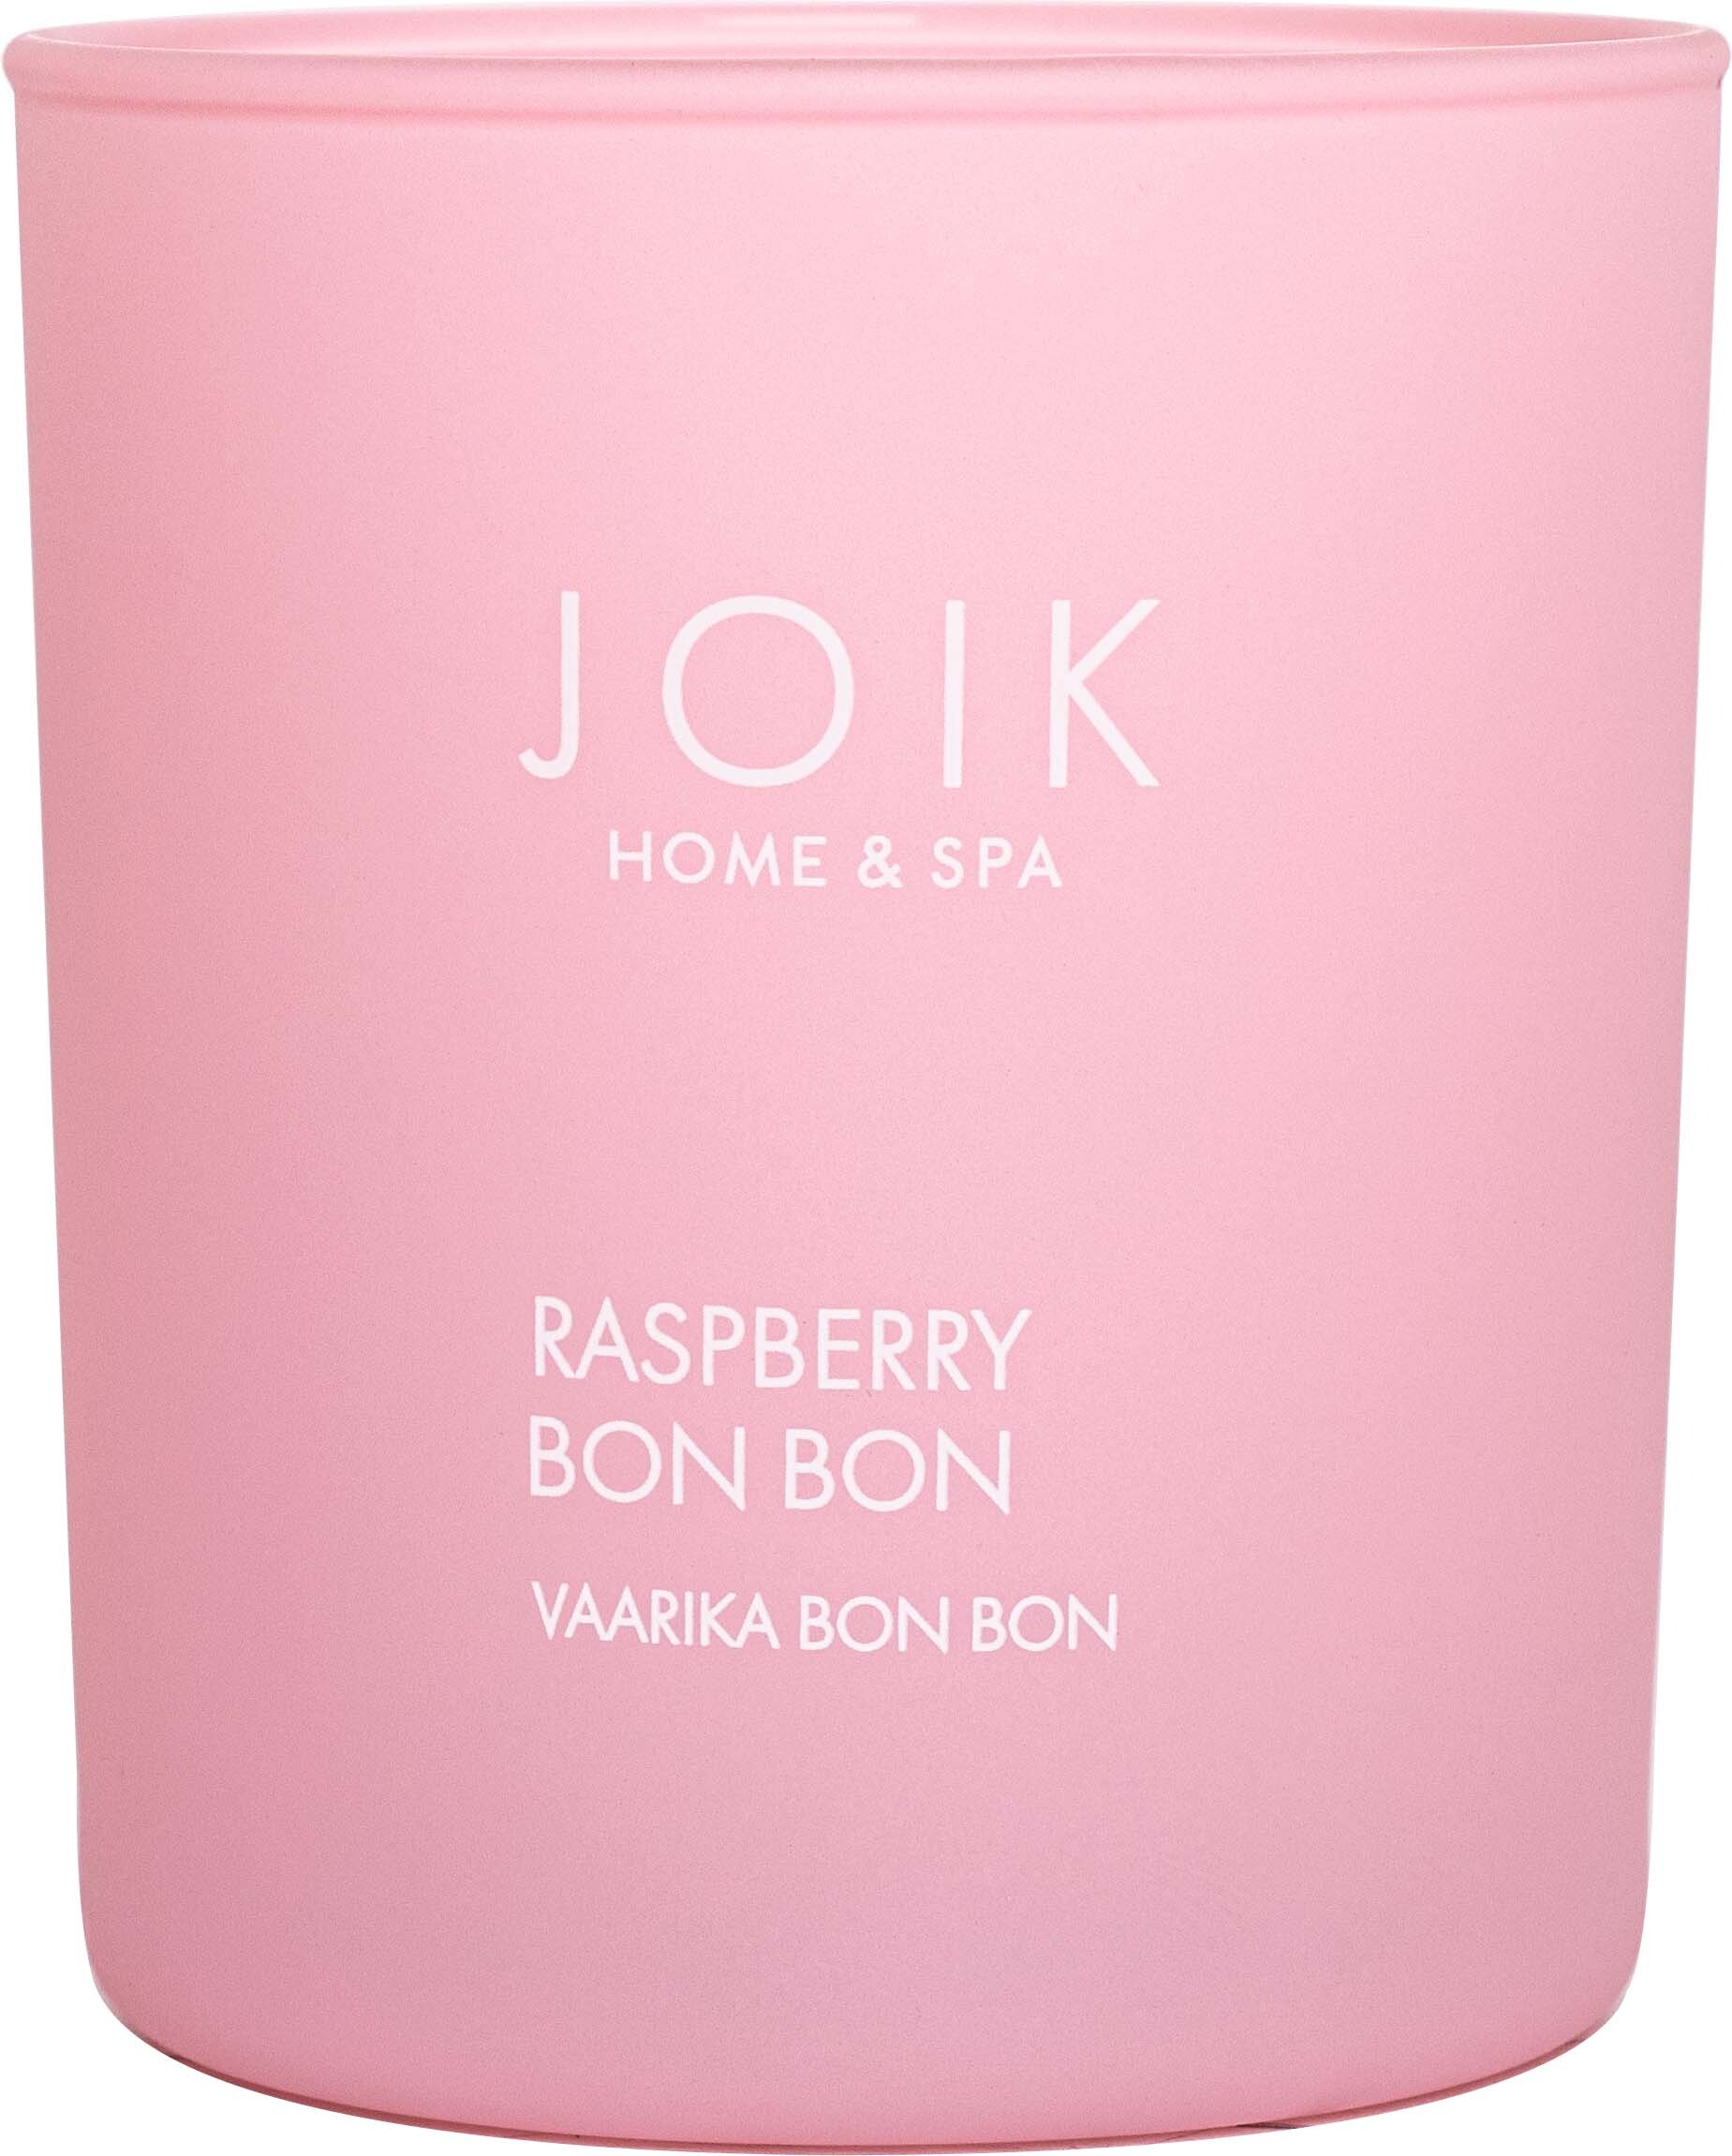 JOIK Organic Home & SPA Scented Candle Raspberry Bonbon